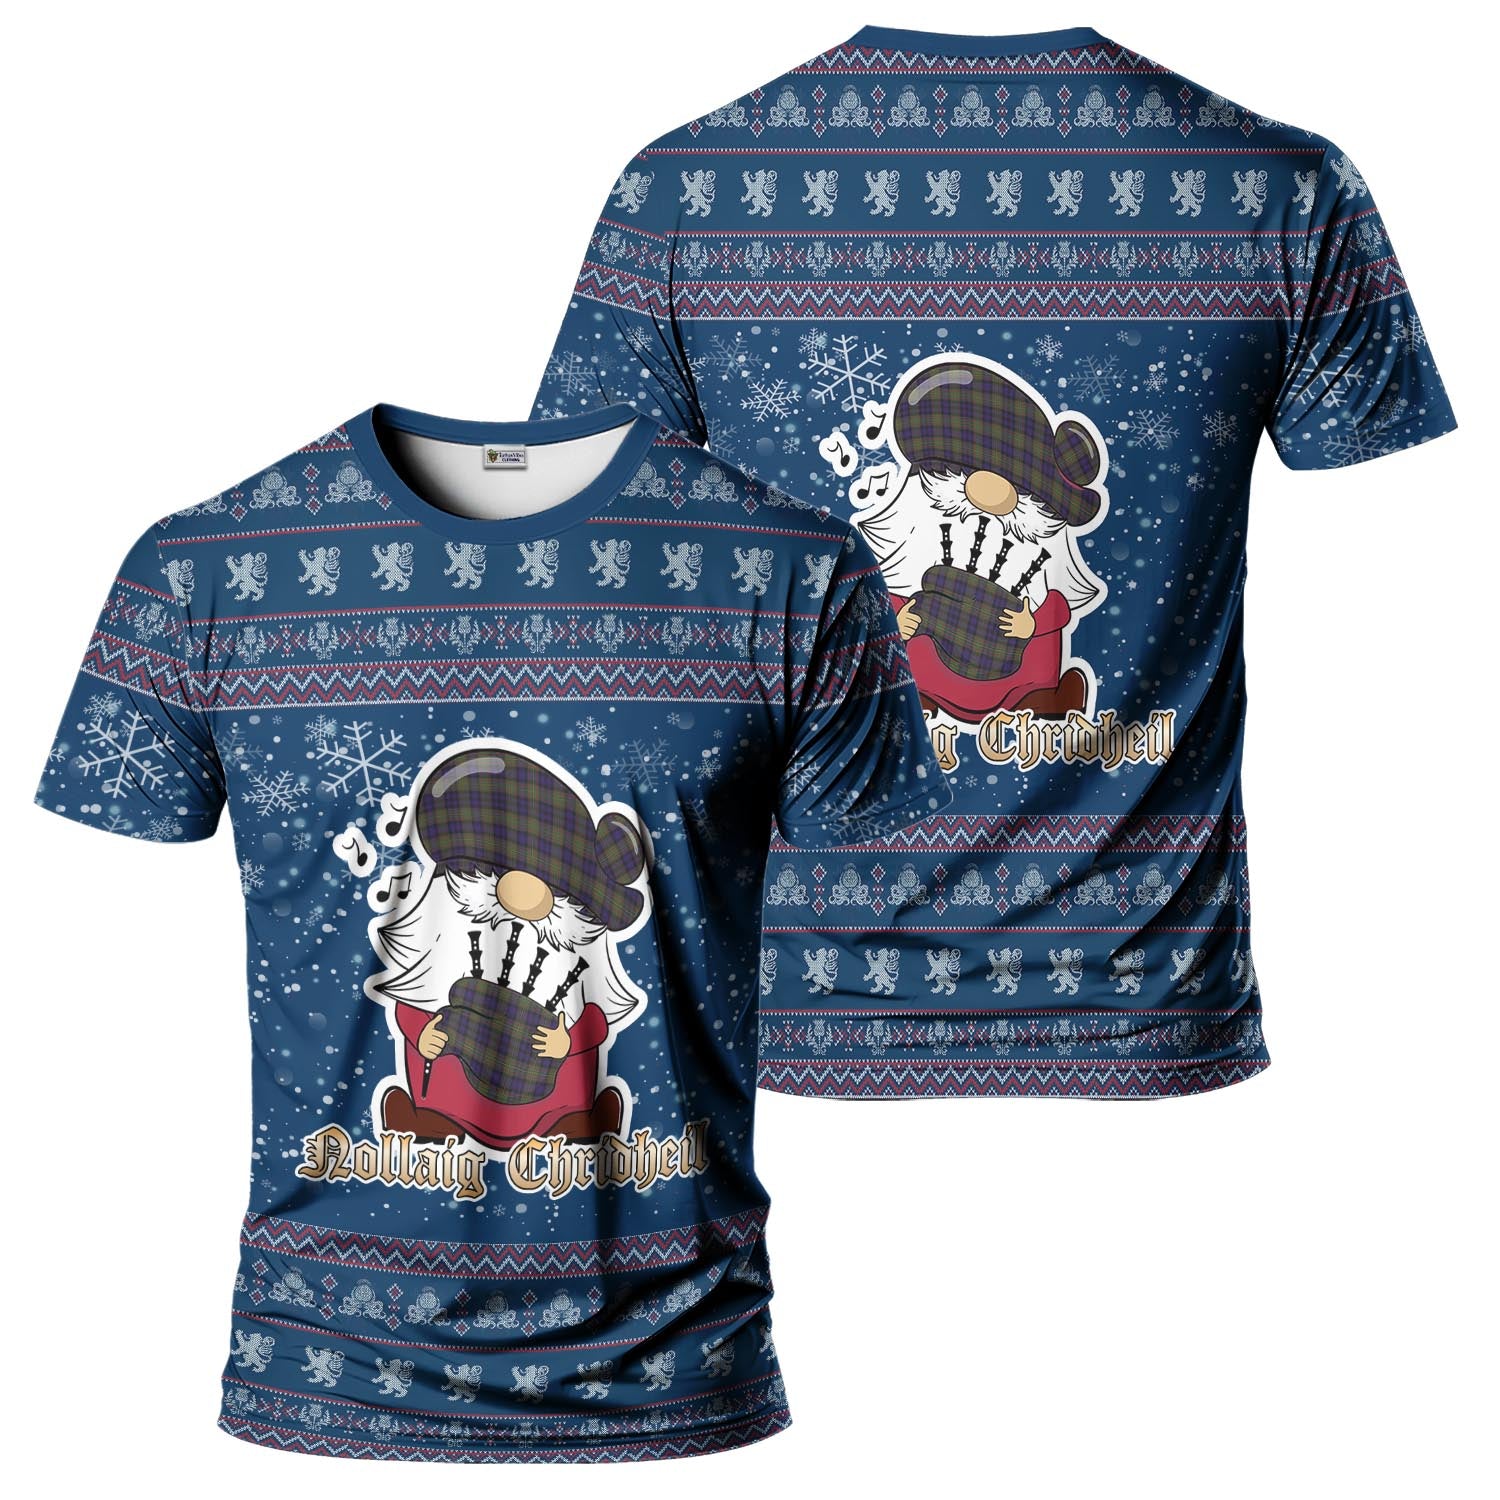 MacLellan Clan Christmas Family T-Shirt with Funny Gnome Playing Bagpipes Kid's Shirt Blue - Tartanvibesclothing